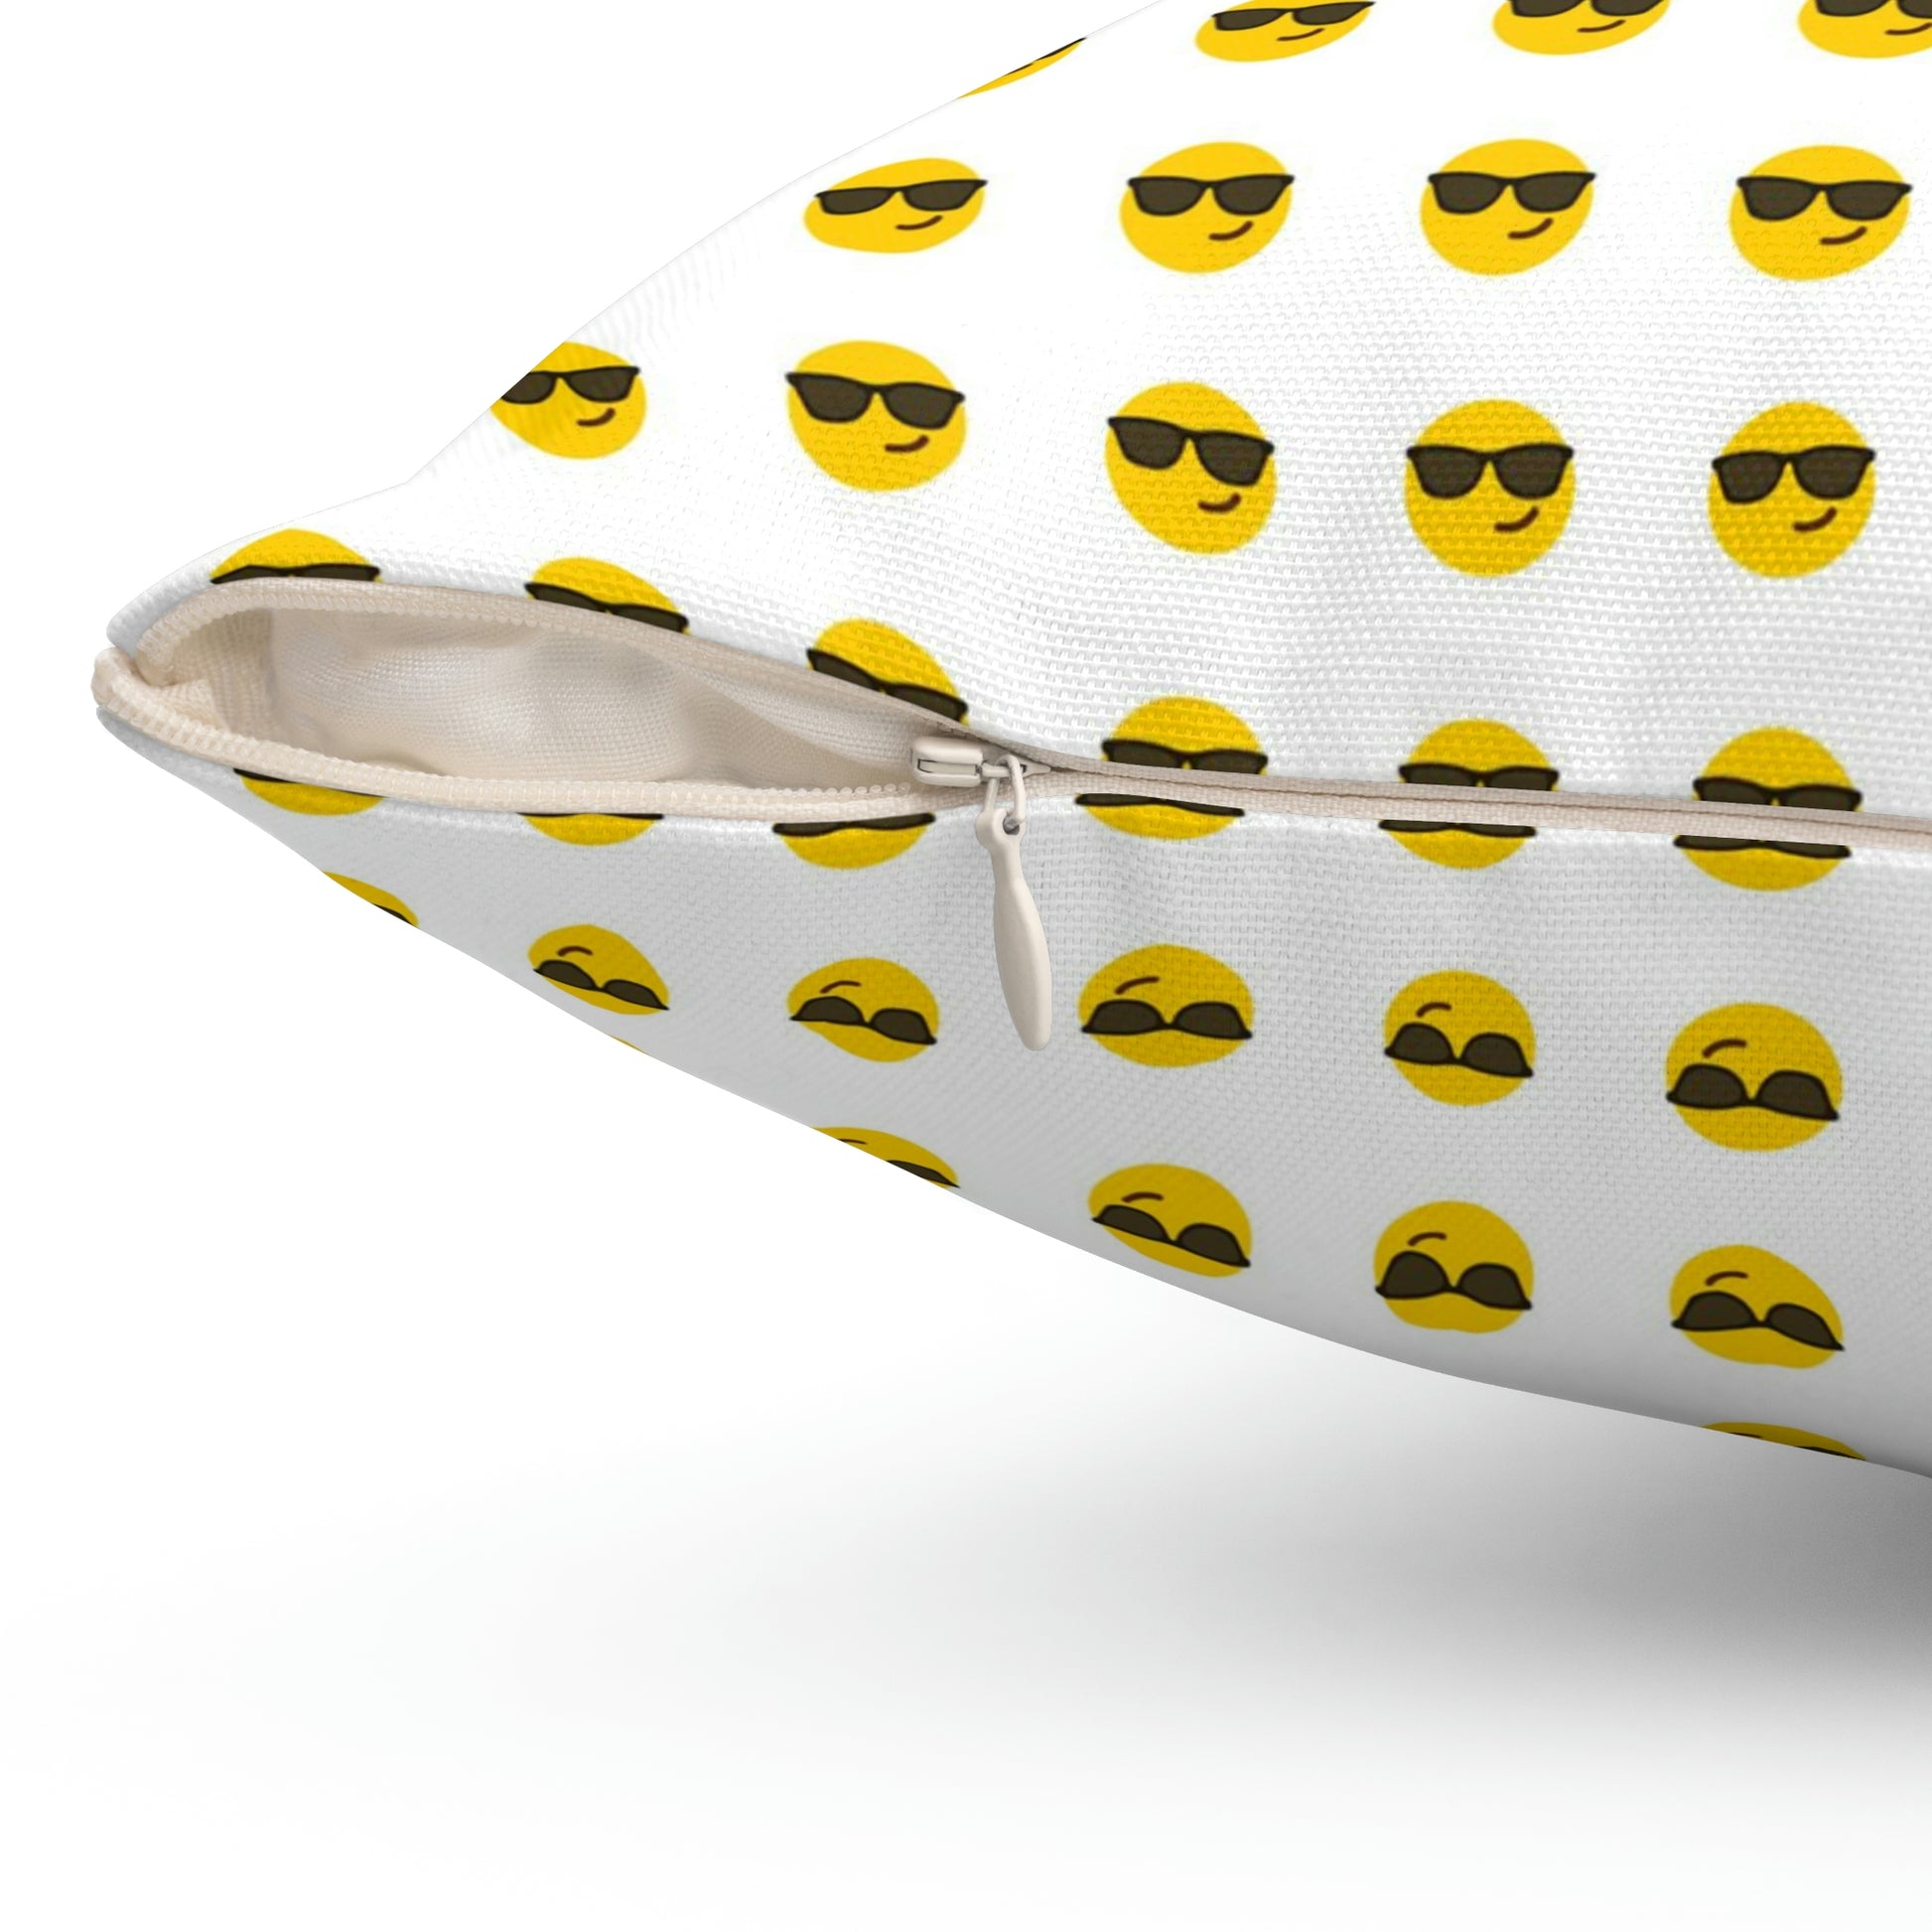 Geotrott Emojis Smiling Face with Sunglasses White Spun Polyester Square Pillow-Home Decor-Geotrott